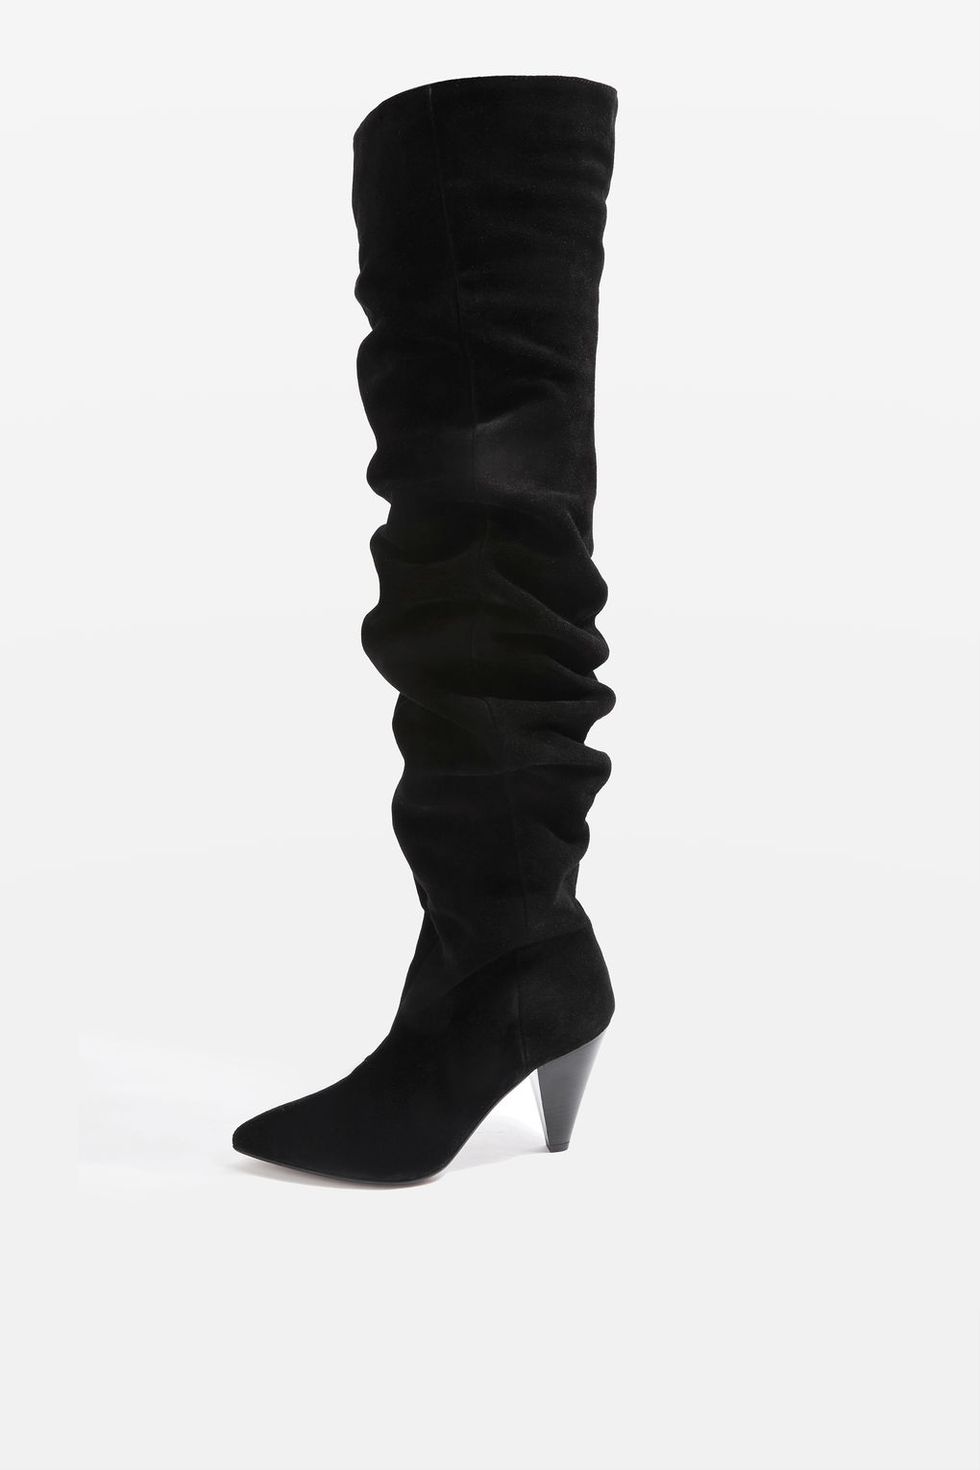 Footwear, Black, Boot, Shoe, Knee-high boot, Leather, Suede, Leg, High heels, Joint, 